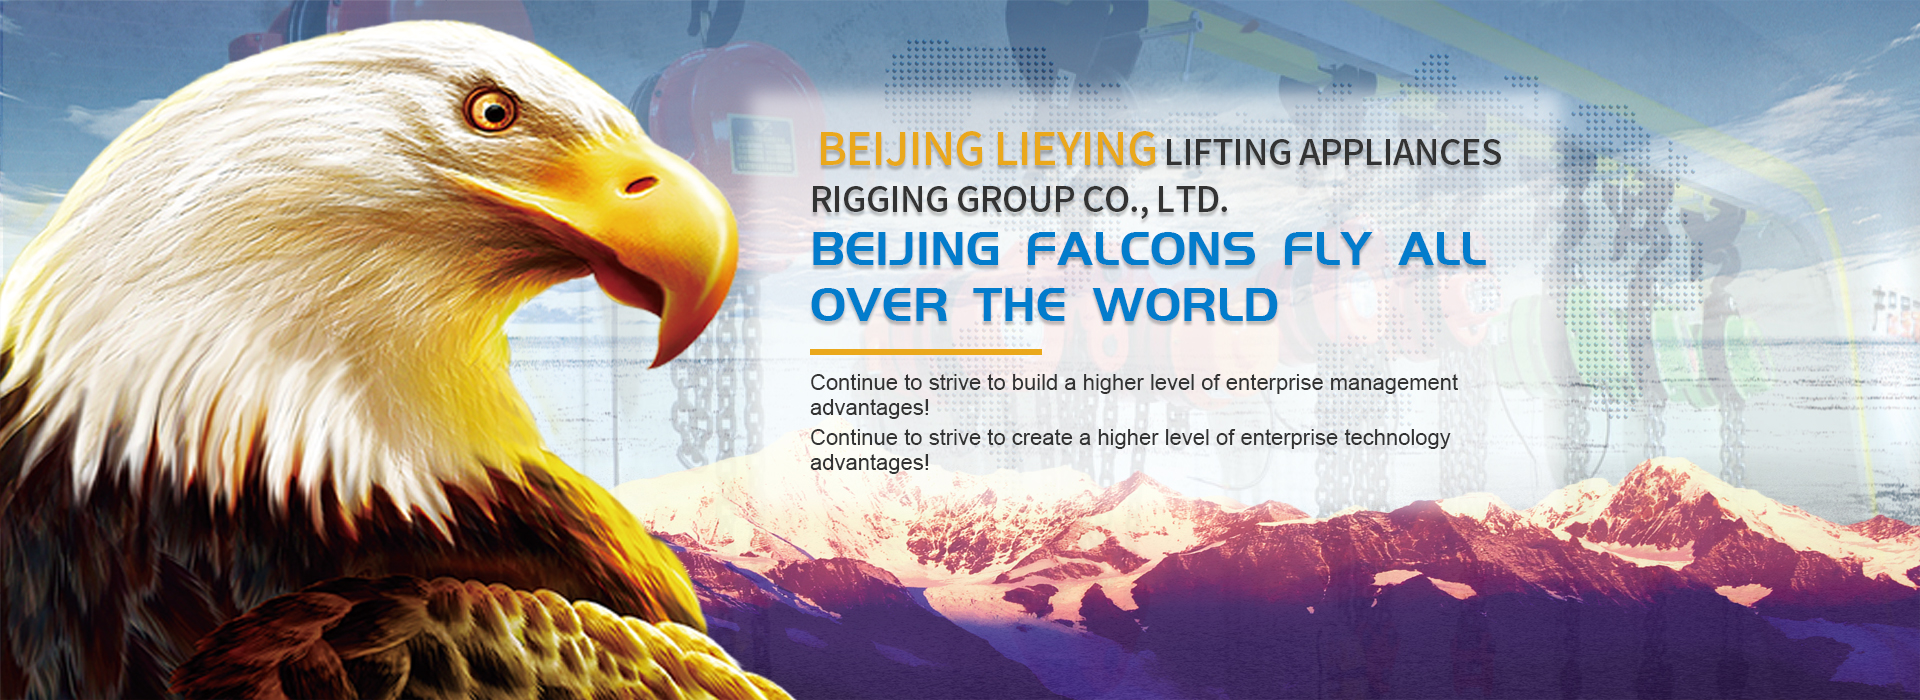 Beijing Lieying Lifting